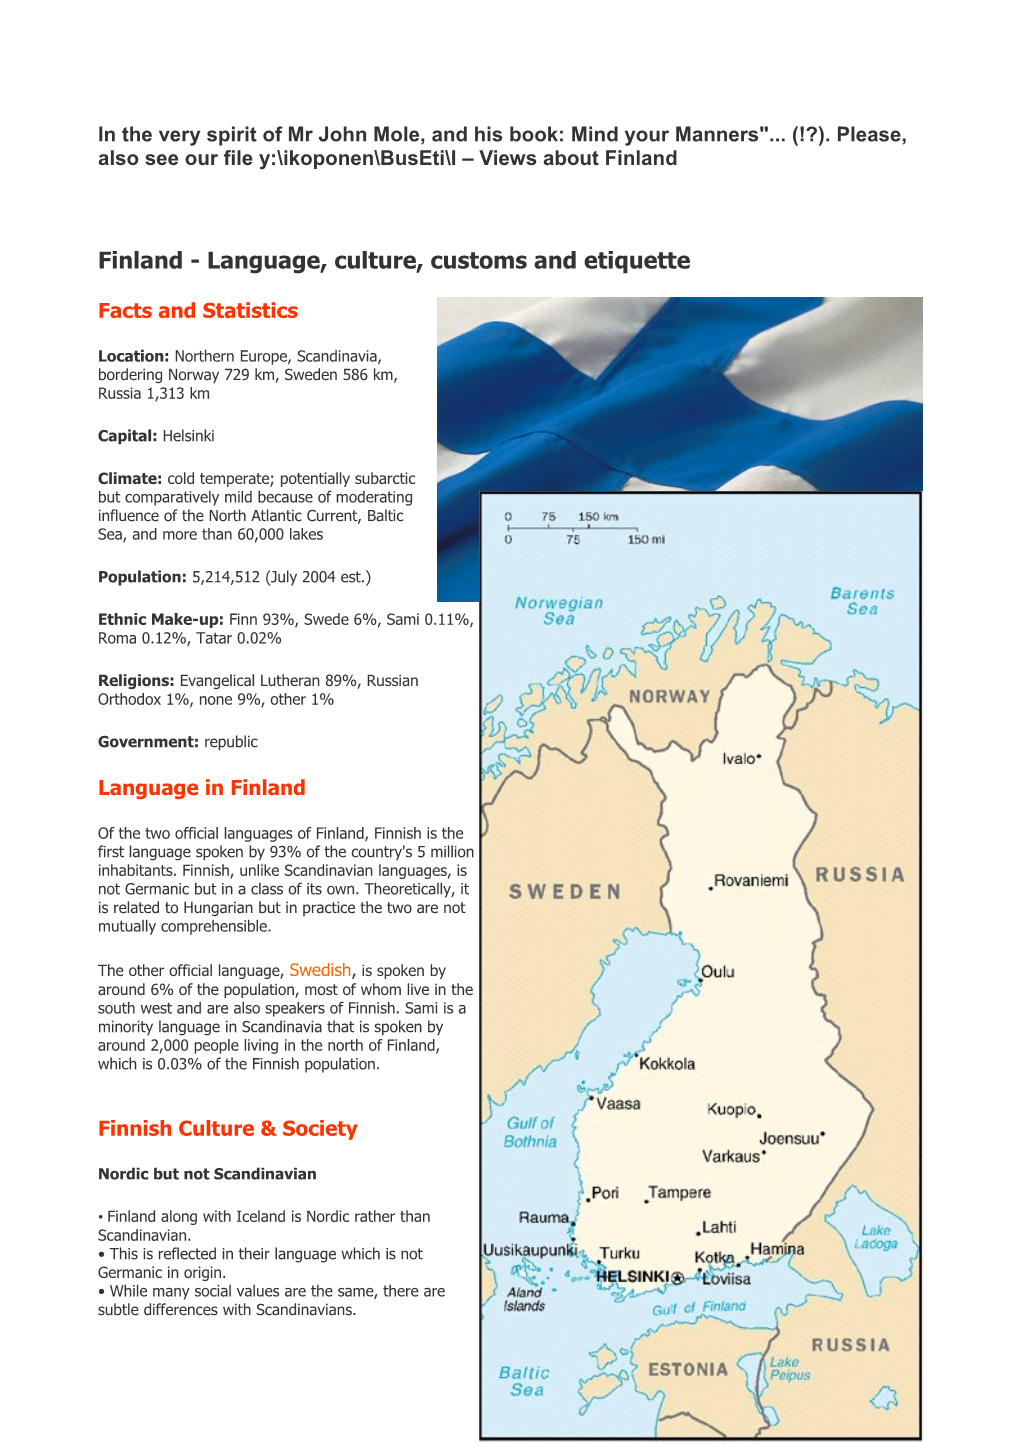 Finland - Language, Culture, Customs and Etiquette